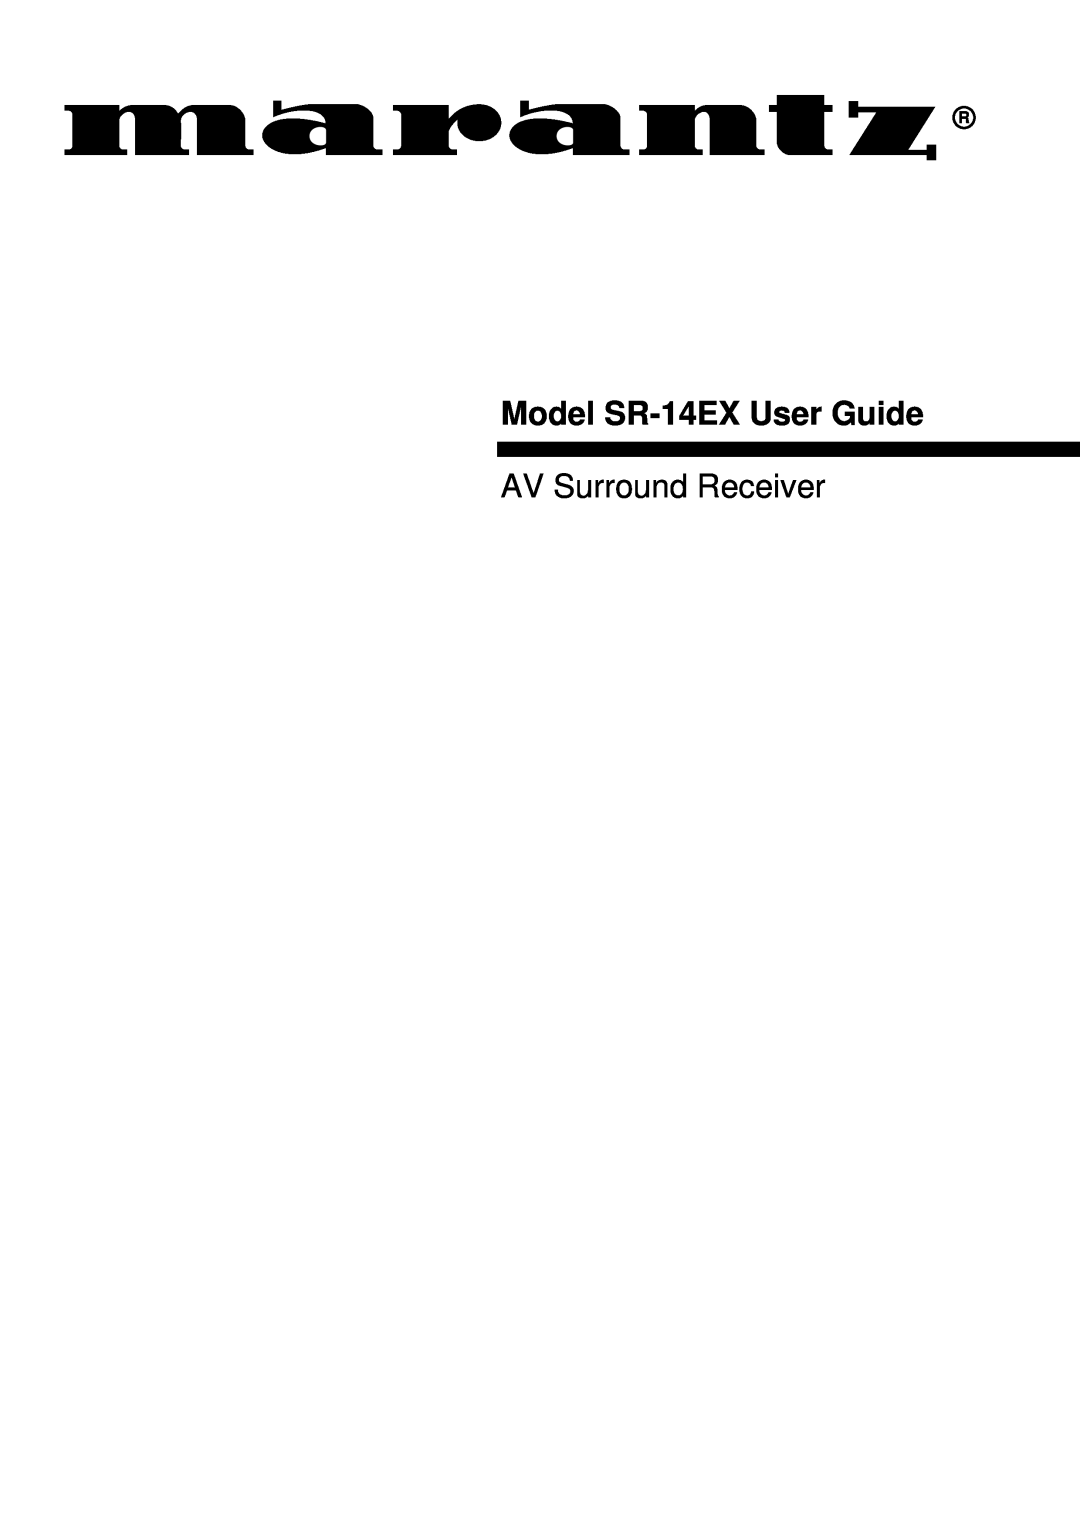 Marantz manual Model SR-14EXUser Guide, AV Surround Receiver 